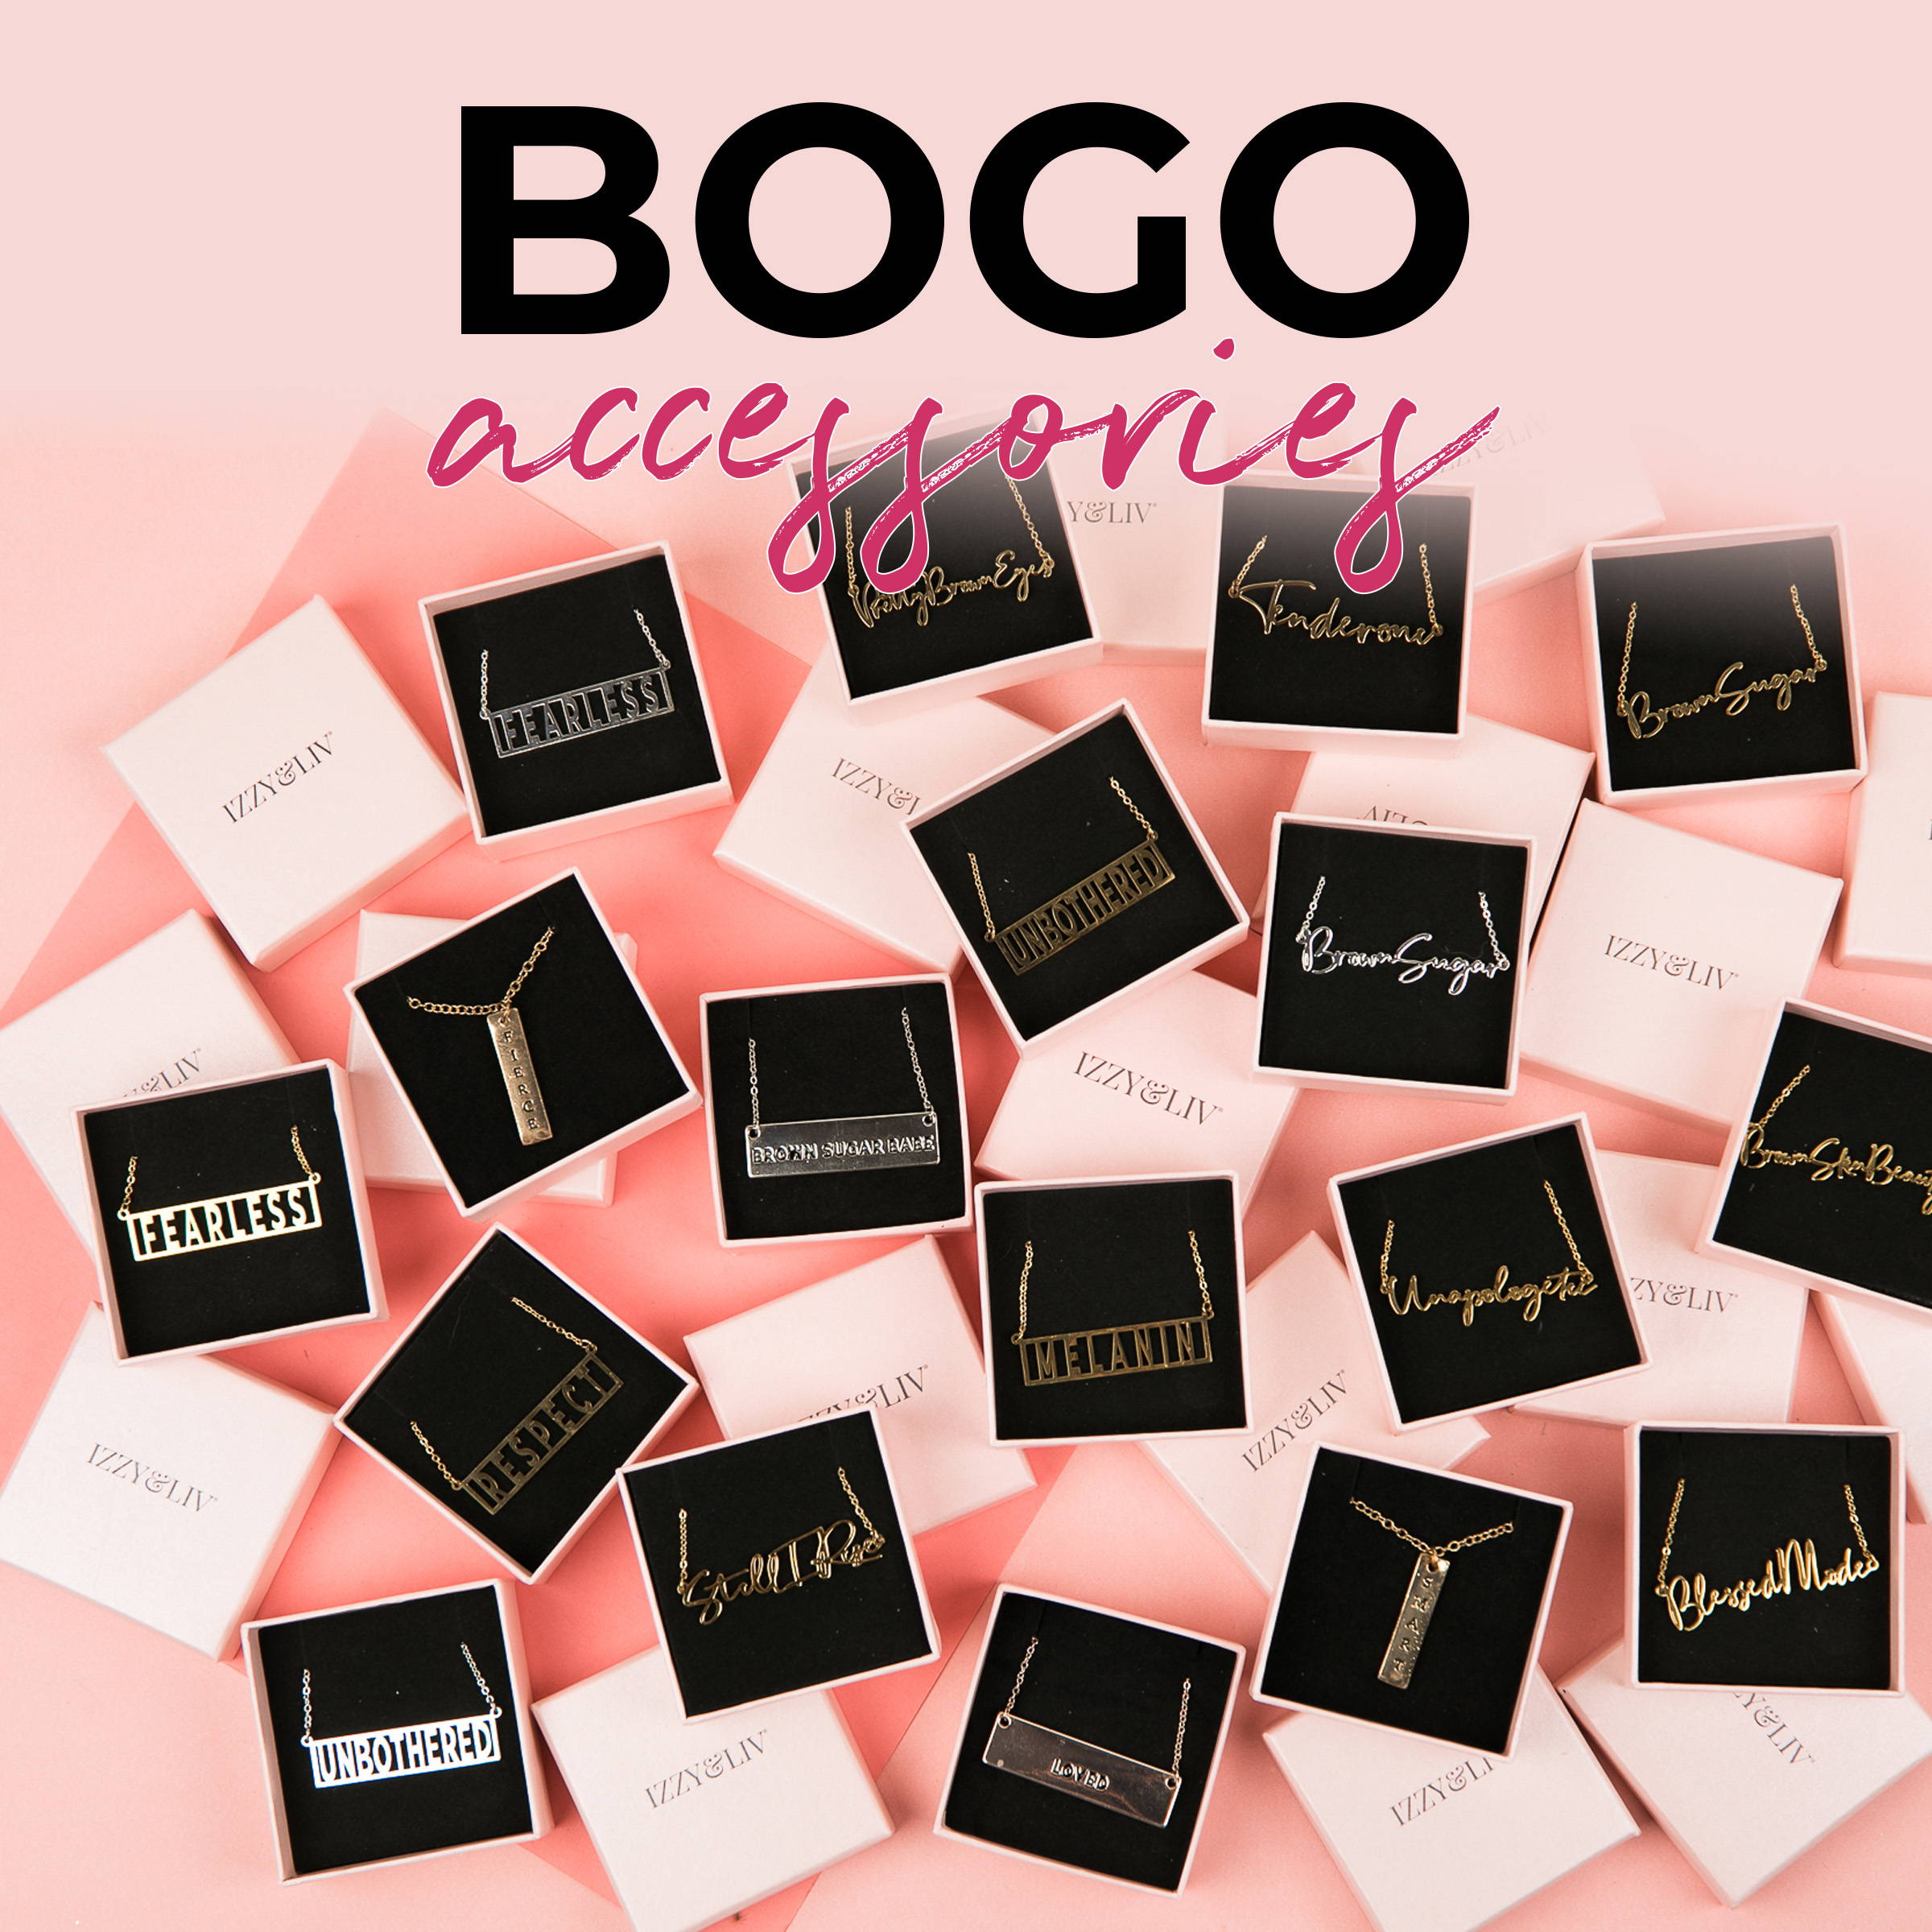 BOGO Accessories - Buy 1 Get 1 Free